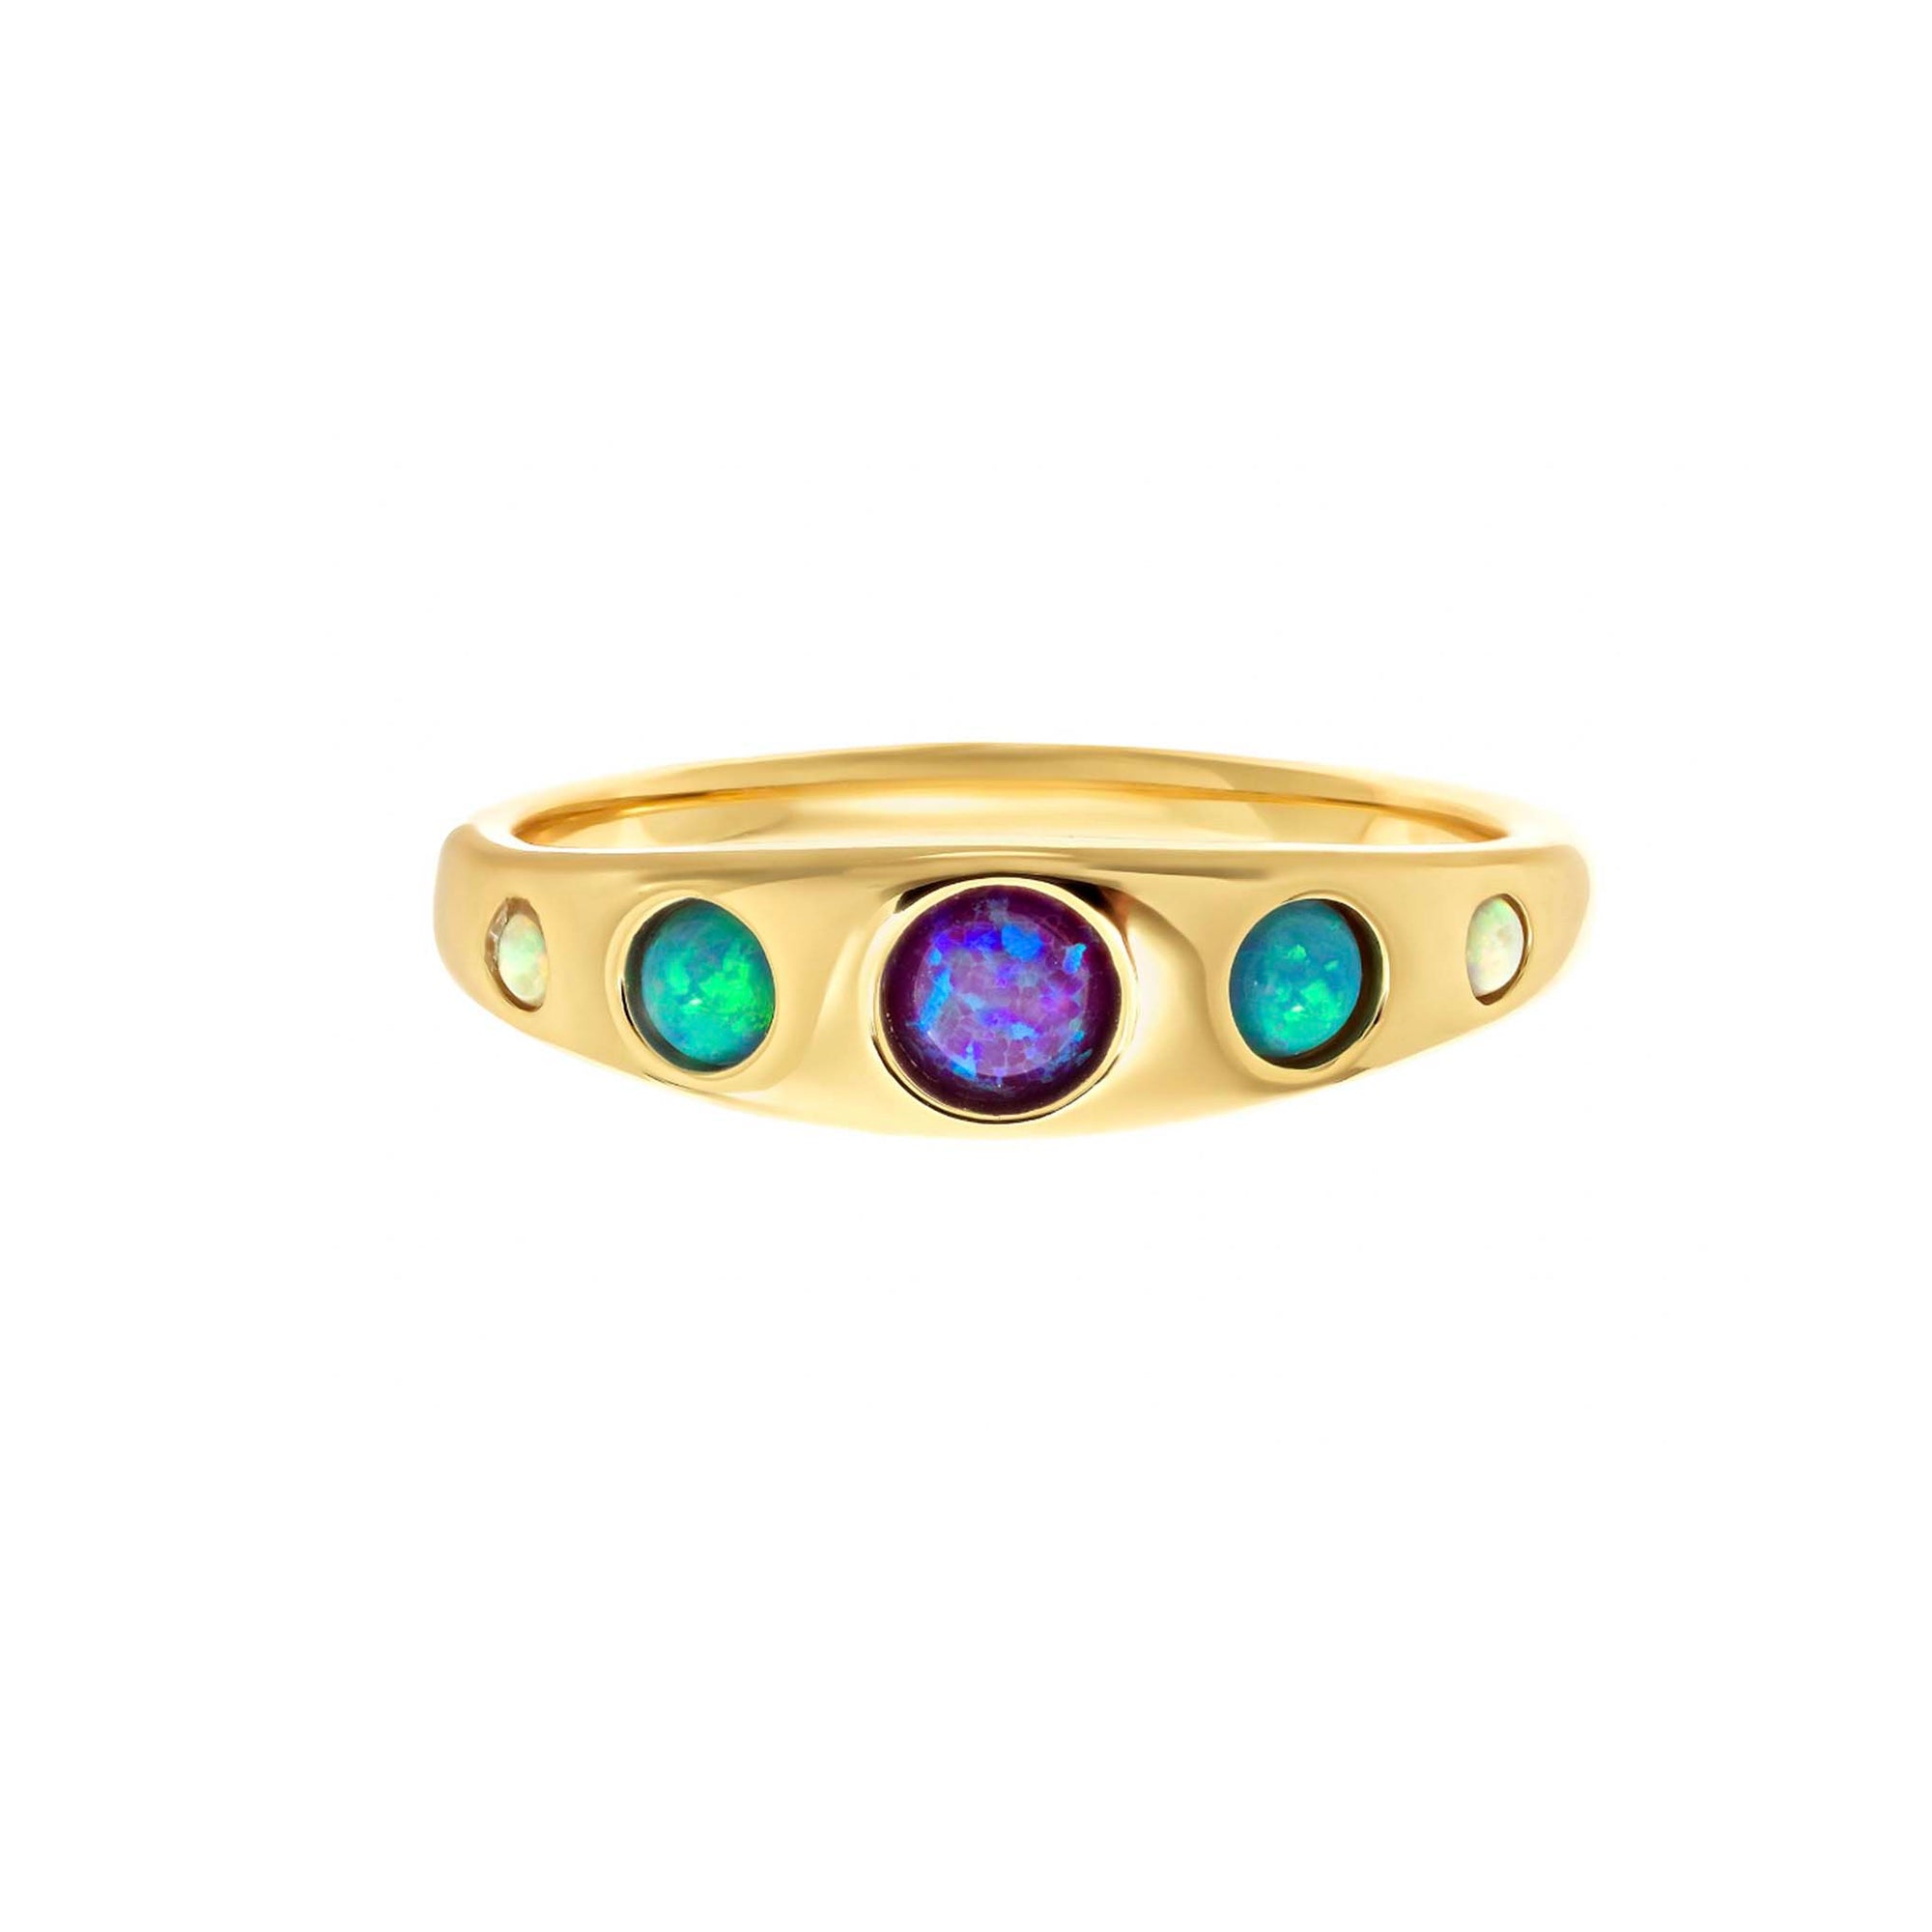 Blue Opal Ombre Via Ring